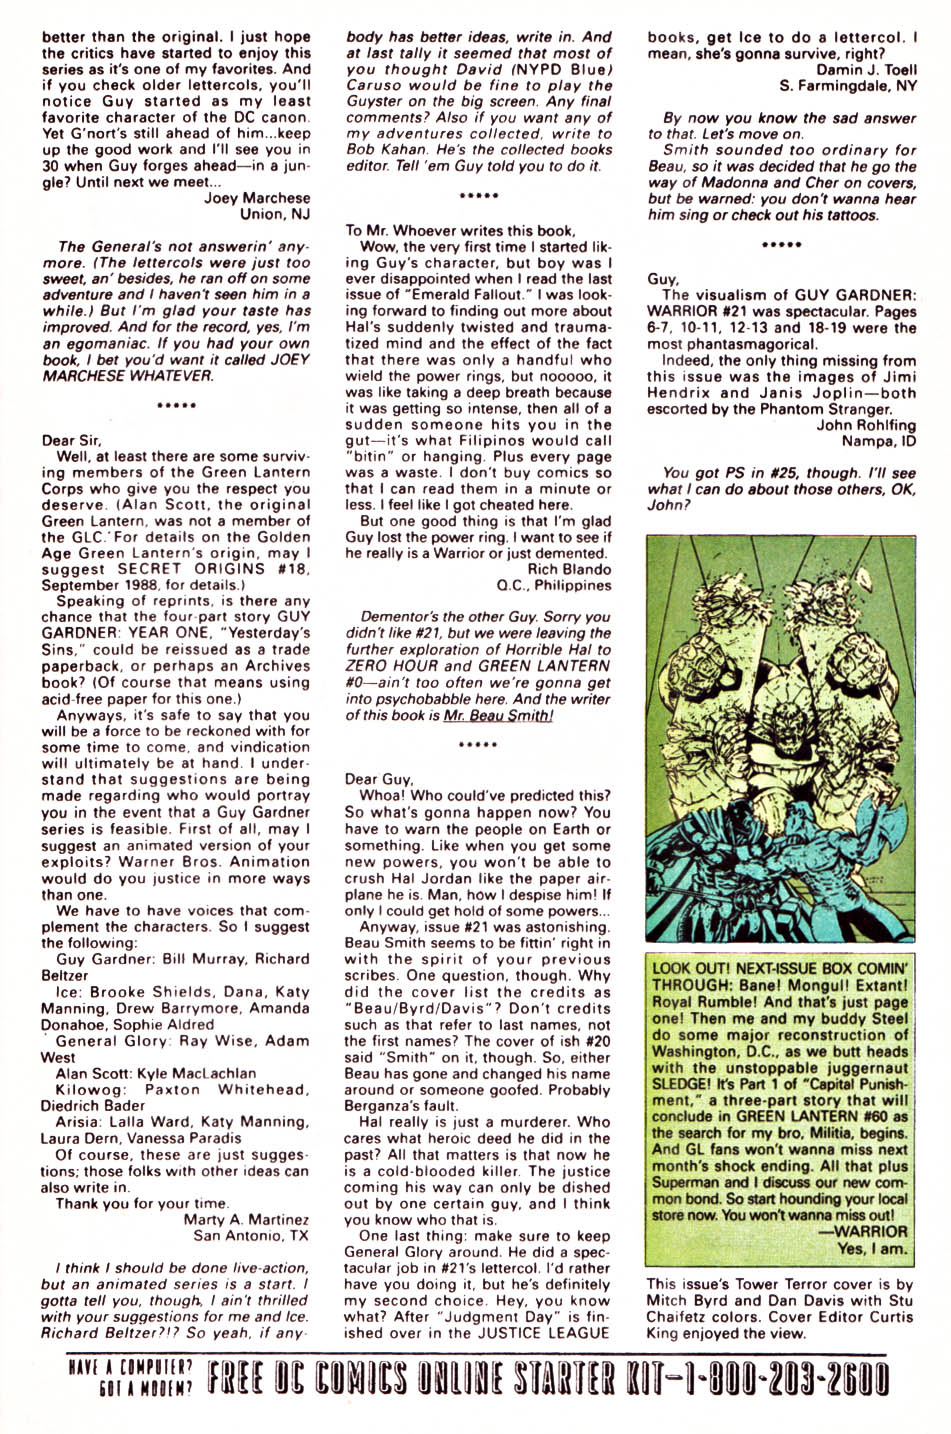 Read online Guy Gardner: Warrior comic -  Issue #26 - 25